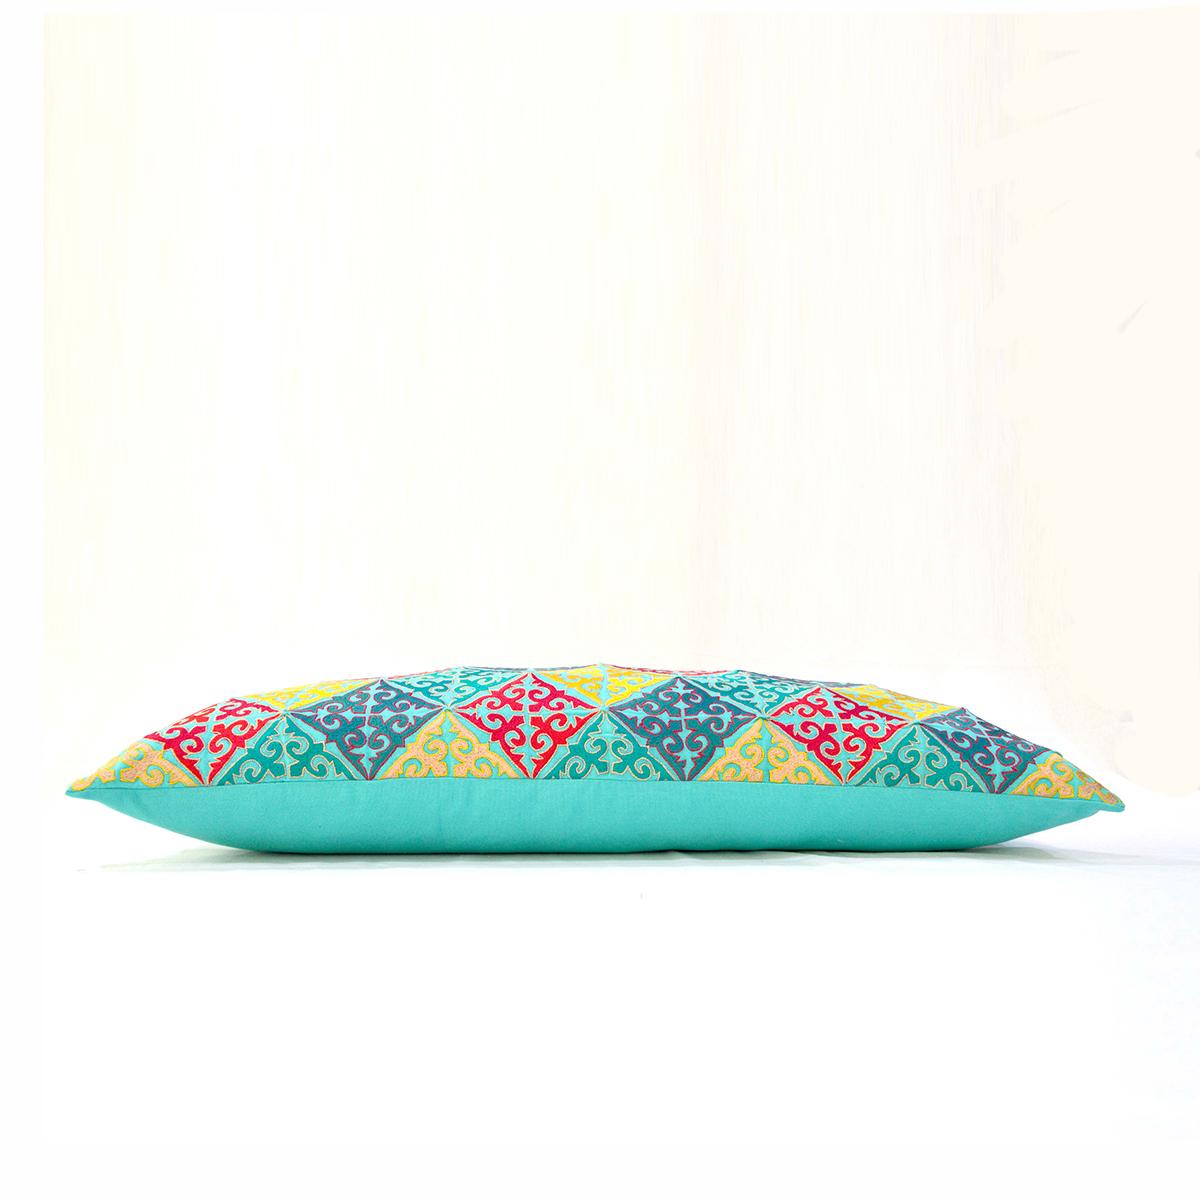 KASHIDAKAARI - Turquoise cotton Long Lumbar pillow cover with multicolour Shyrdak inspired embroidery, sizes available